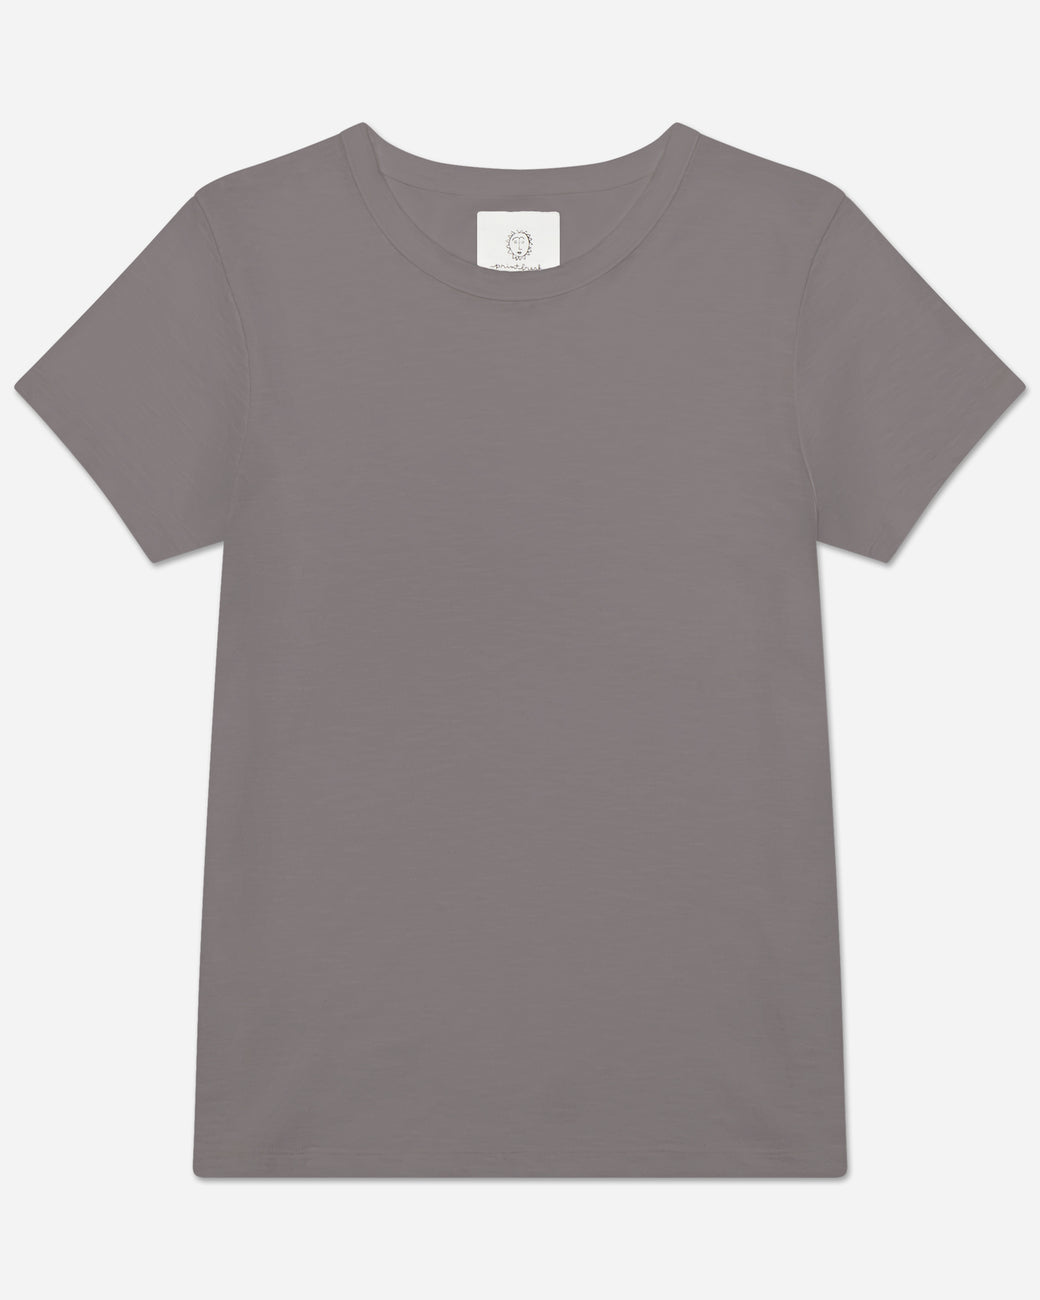 Saturday Tee - Knit T-Shirt - Pebble - Printfresh